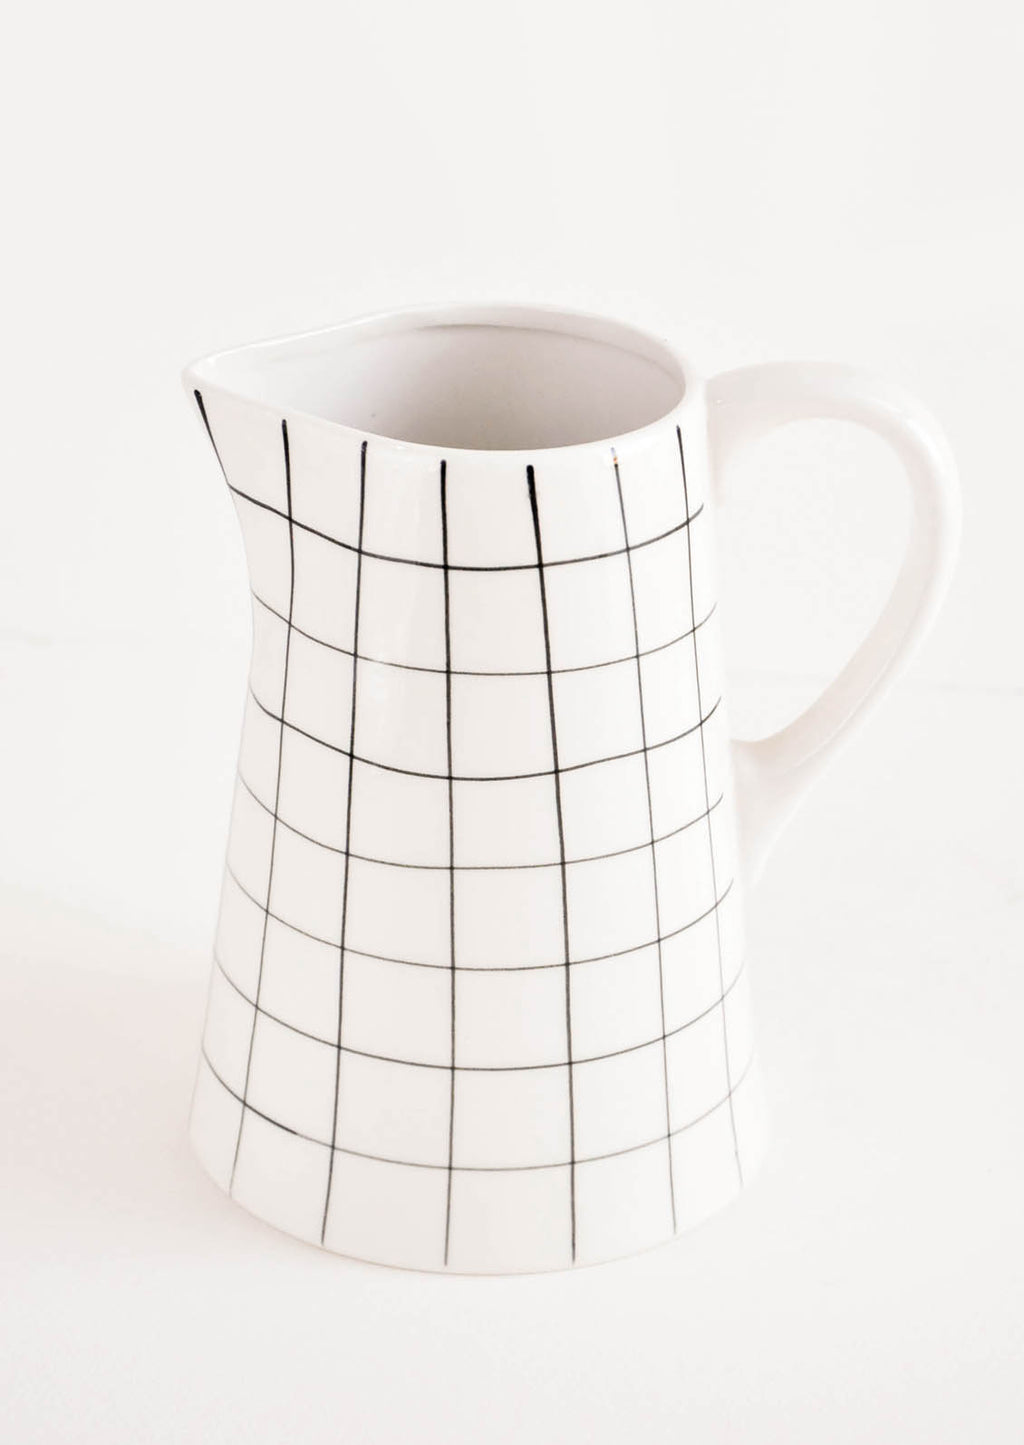 1: Grid Print Ceramic Pitcher in White & Black - LEIF